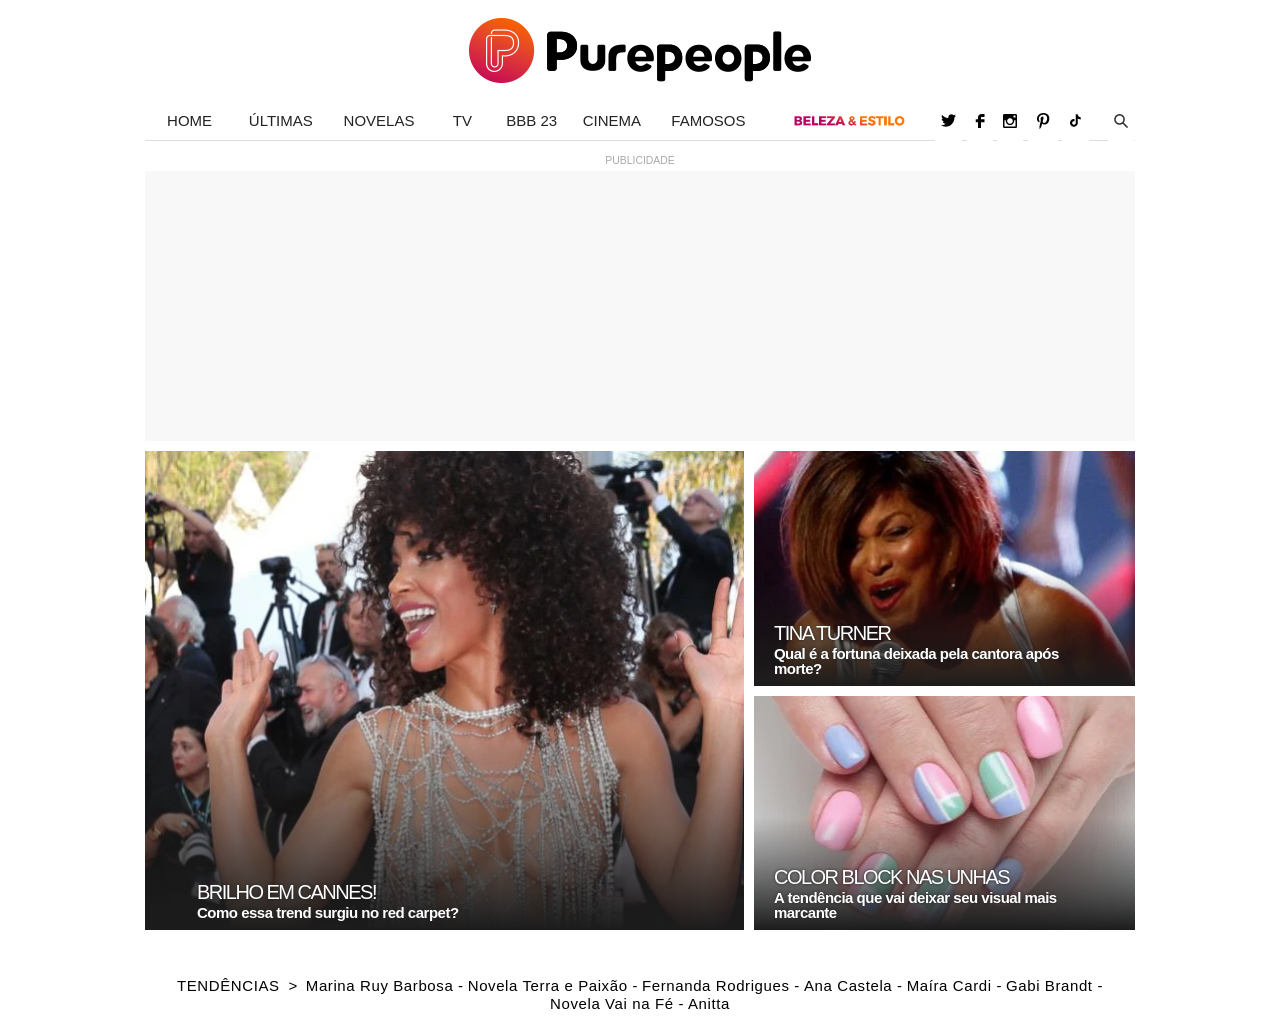 www.purepeople.com.br